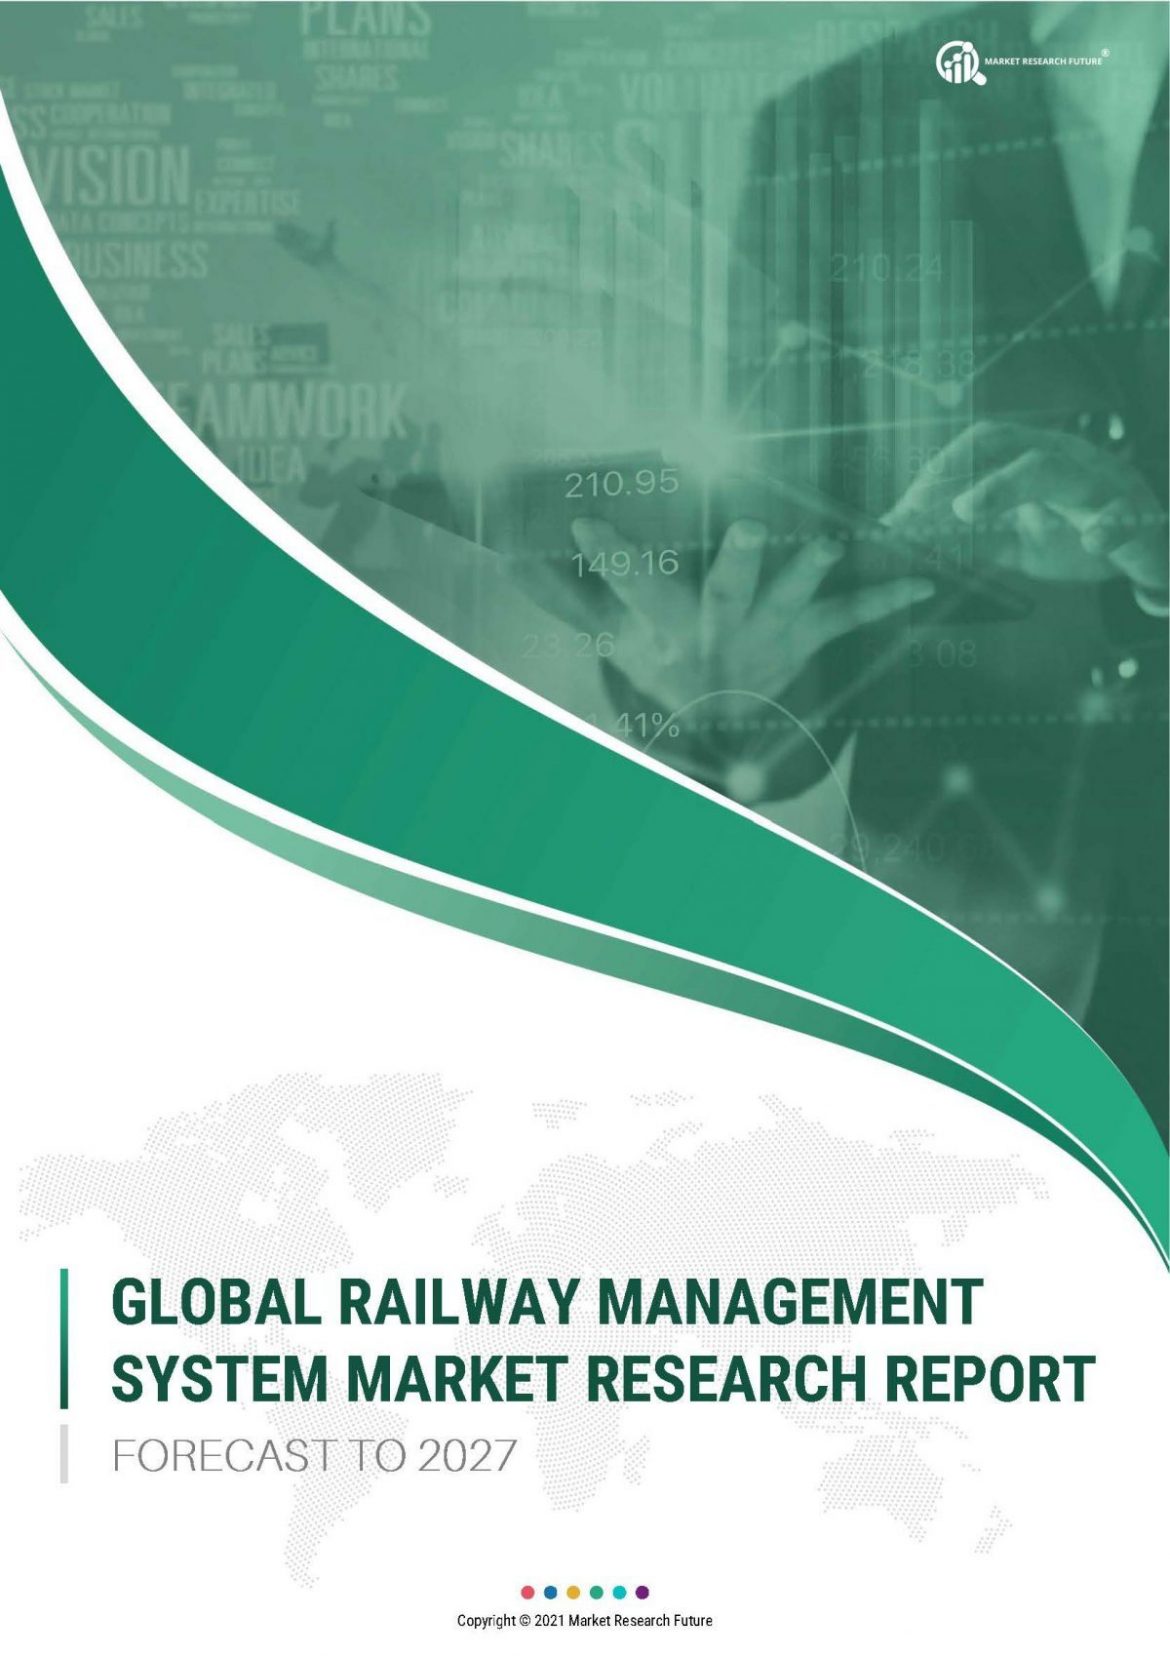 Global railway management system market report